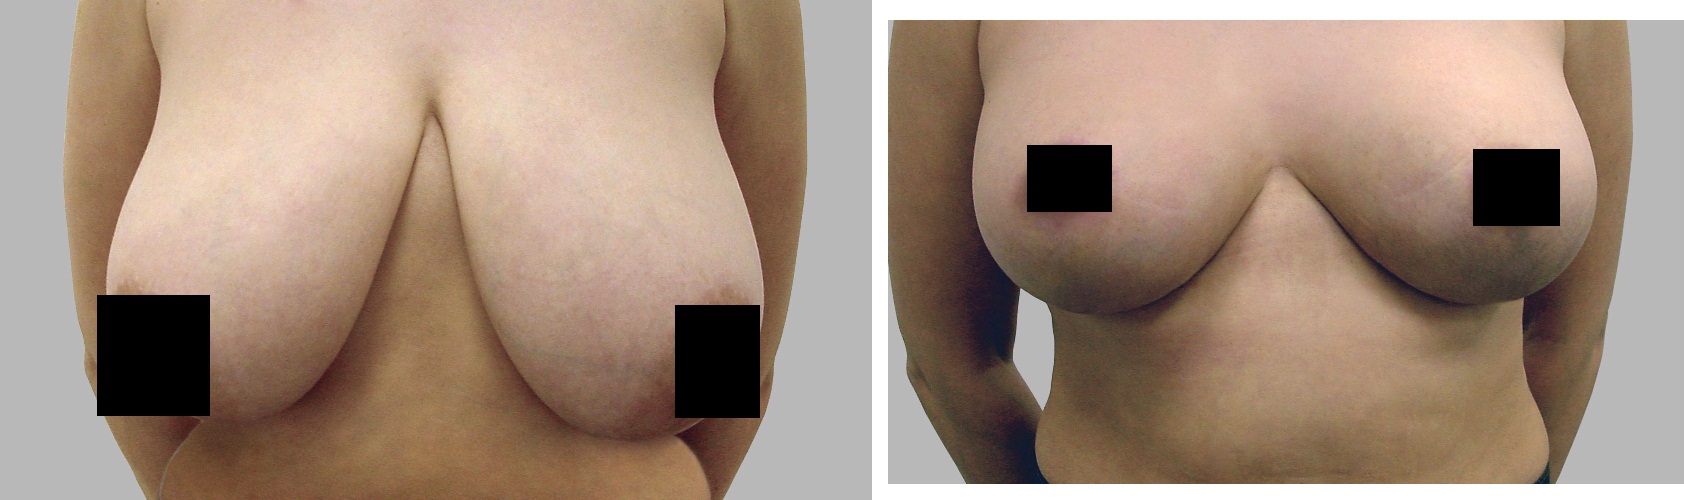 Фото до и после оперативного уменьшения груди